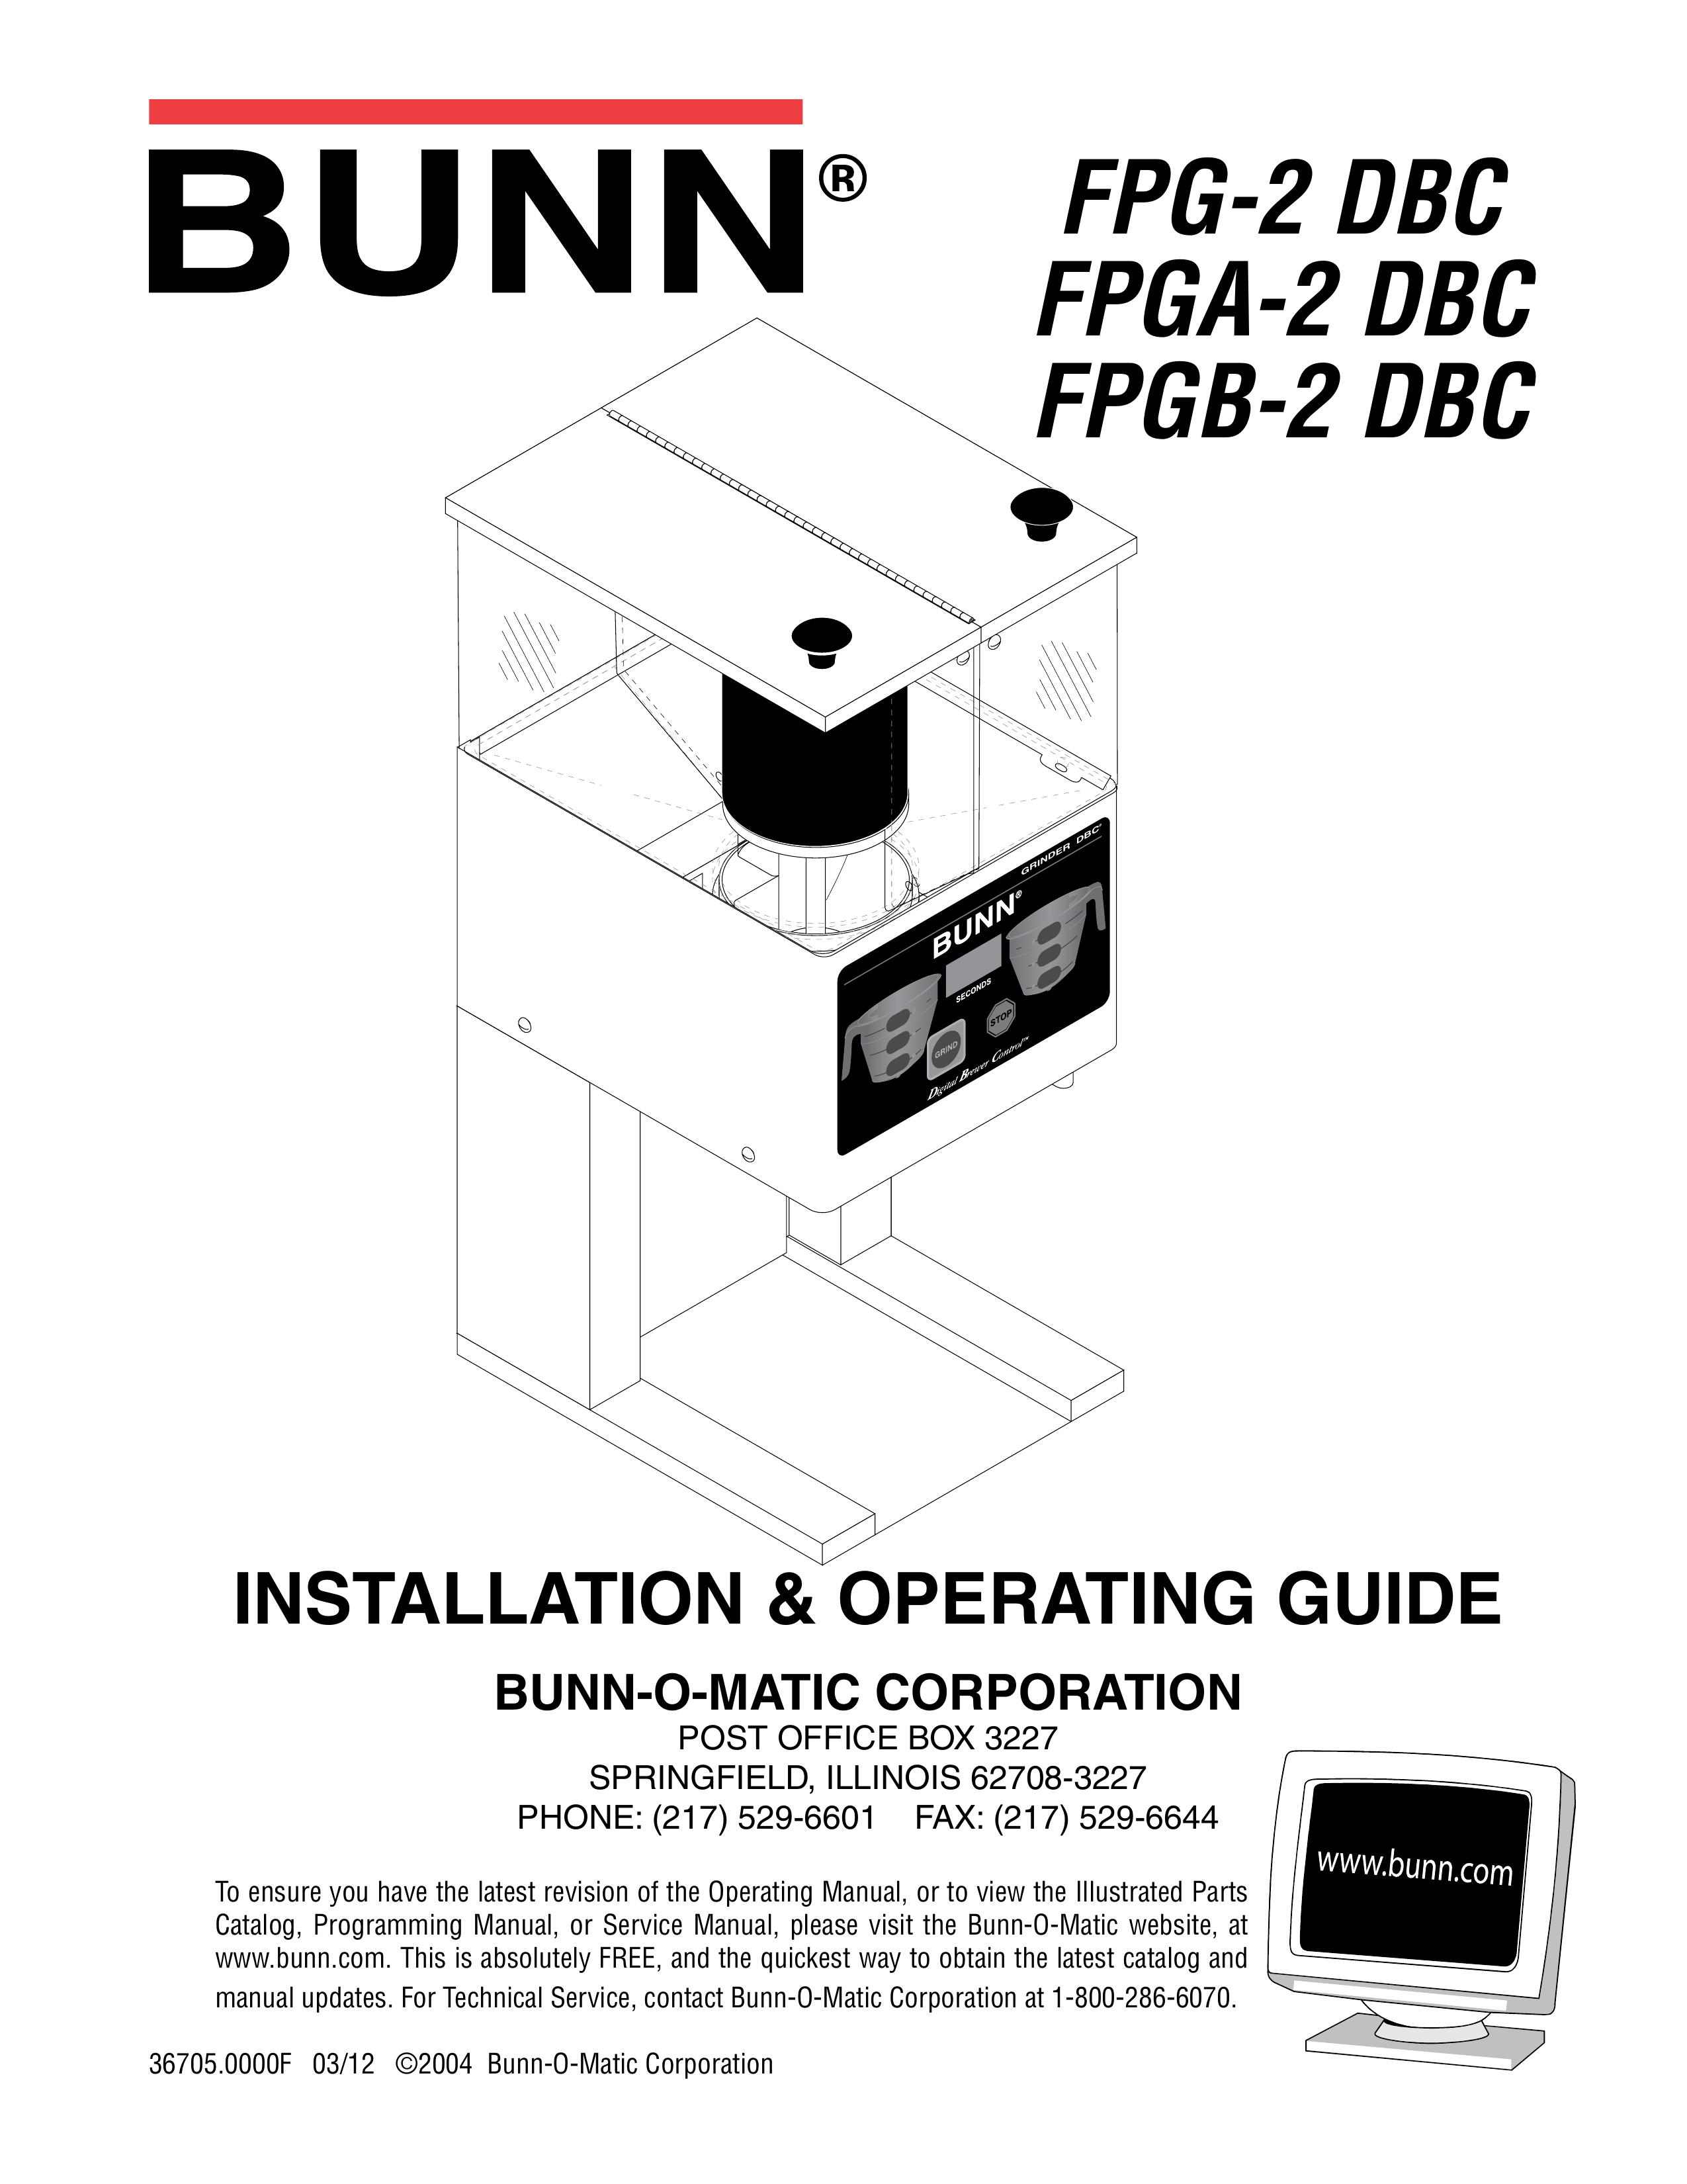 Bunn FPGB-2 DBC Water Dispenser User Manual